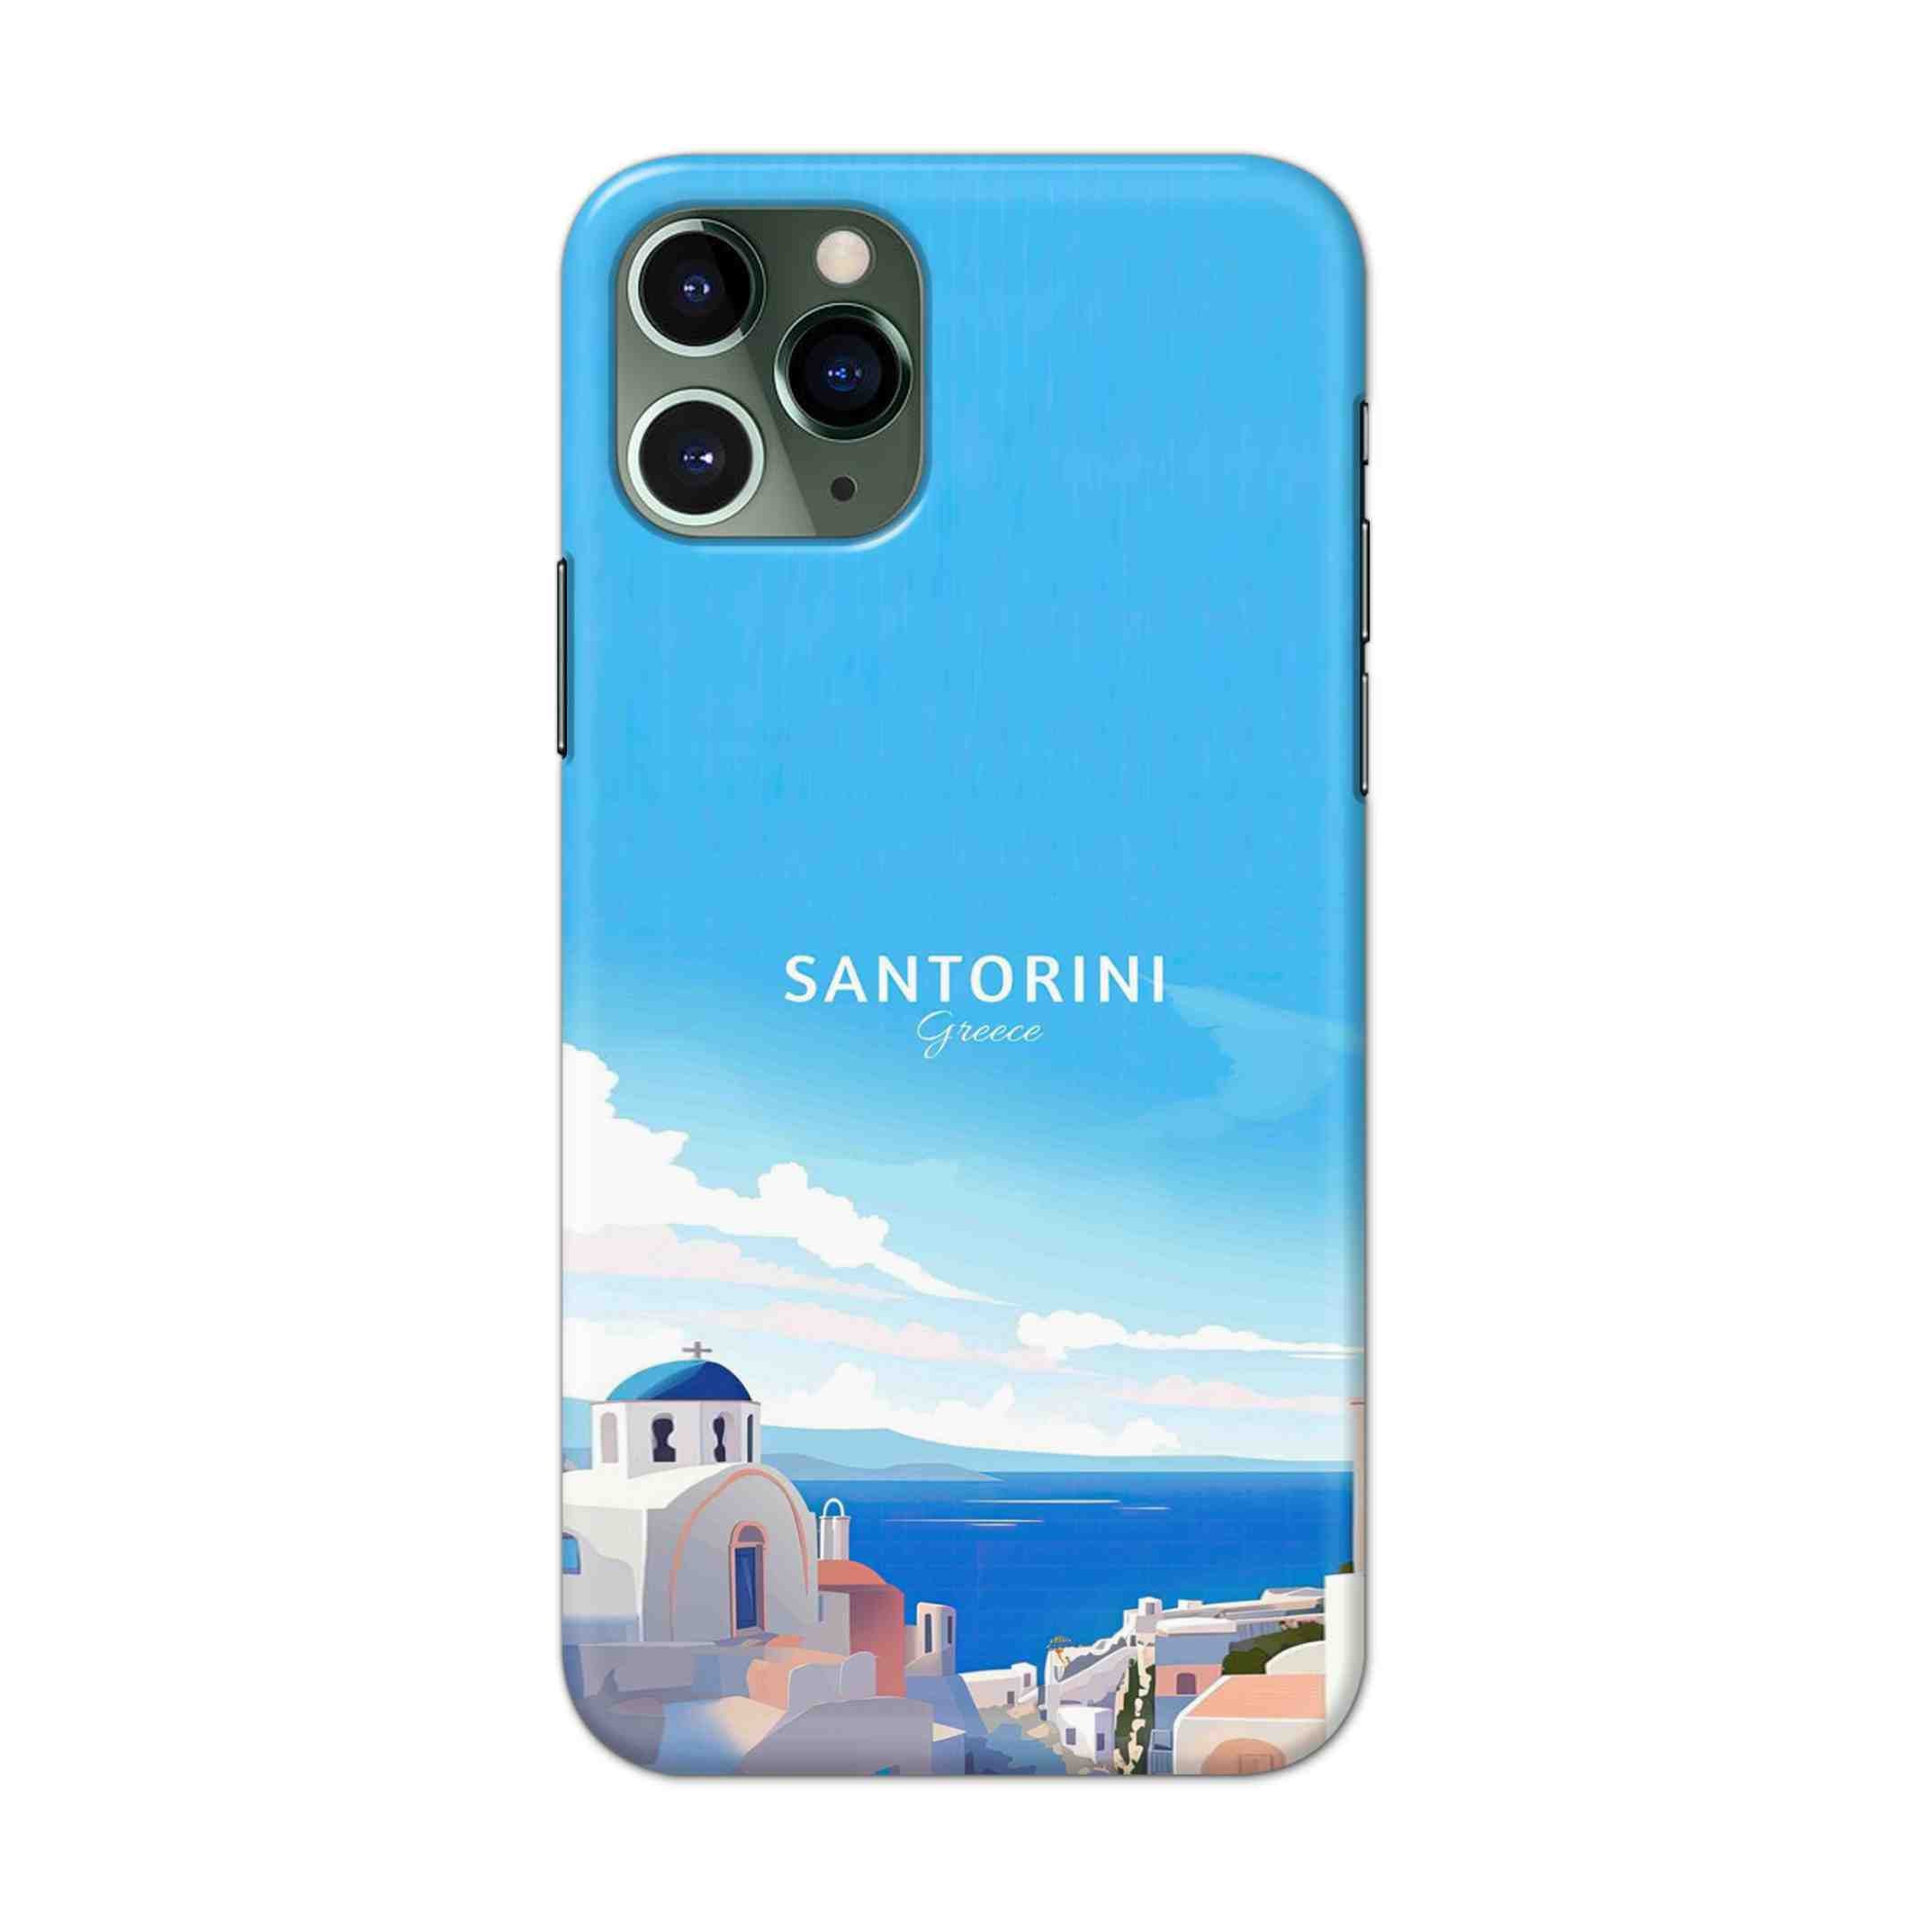 Buy Santorini Hard Back Mobile Phone Case/Cover For iPhone 11 Pro Online